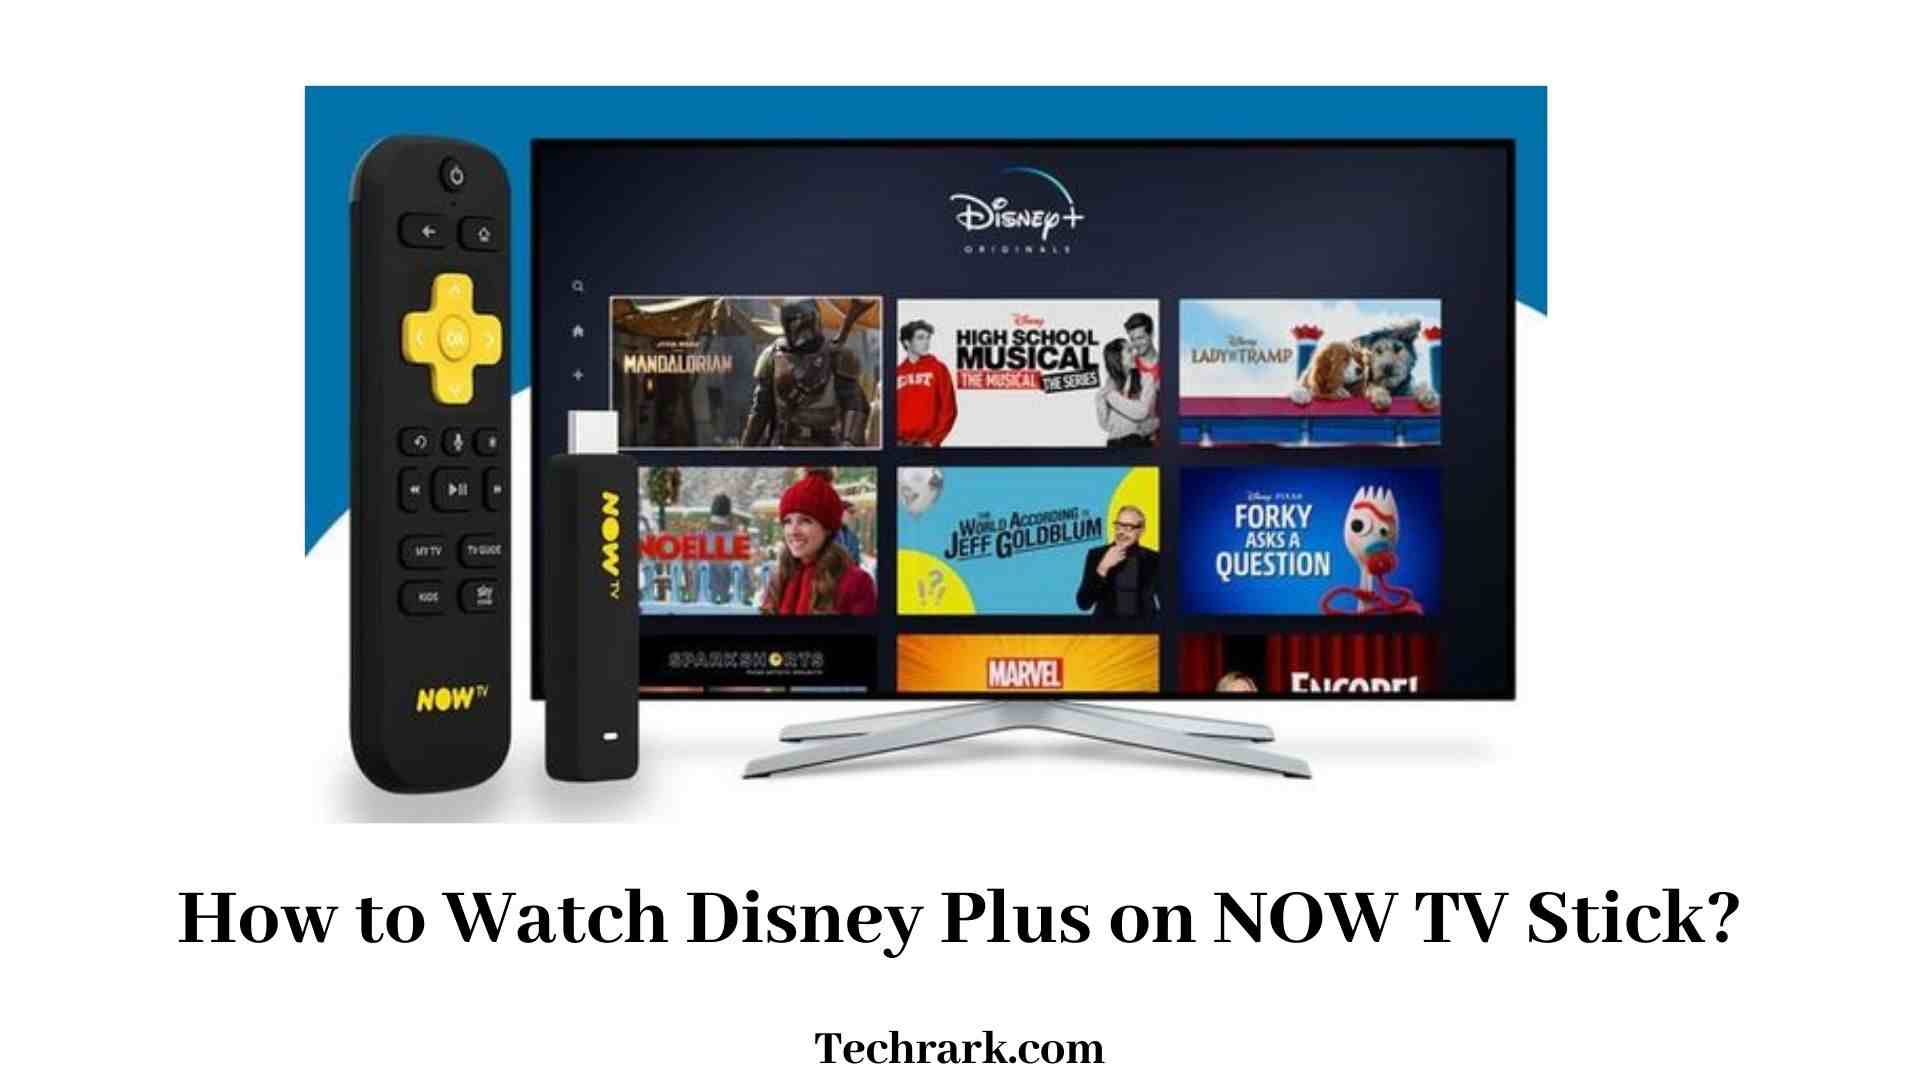 Disney Plus on NOW TV Stick